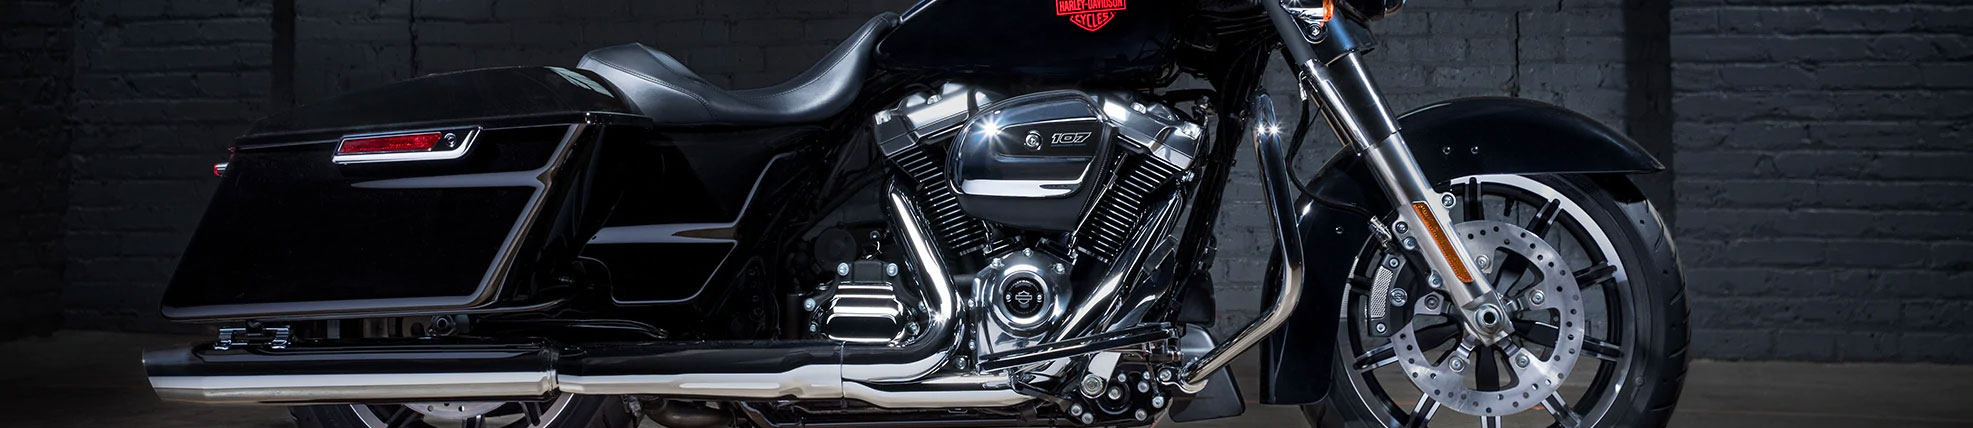 Harley-Davidson® Extended service program